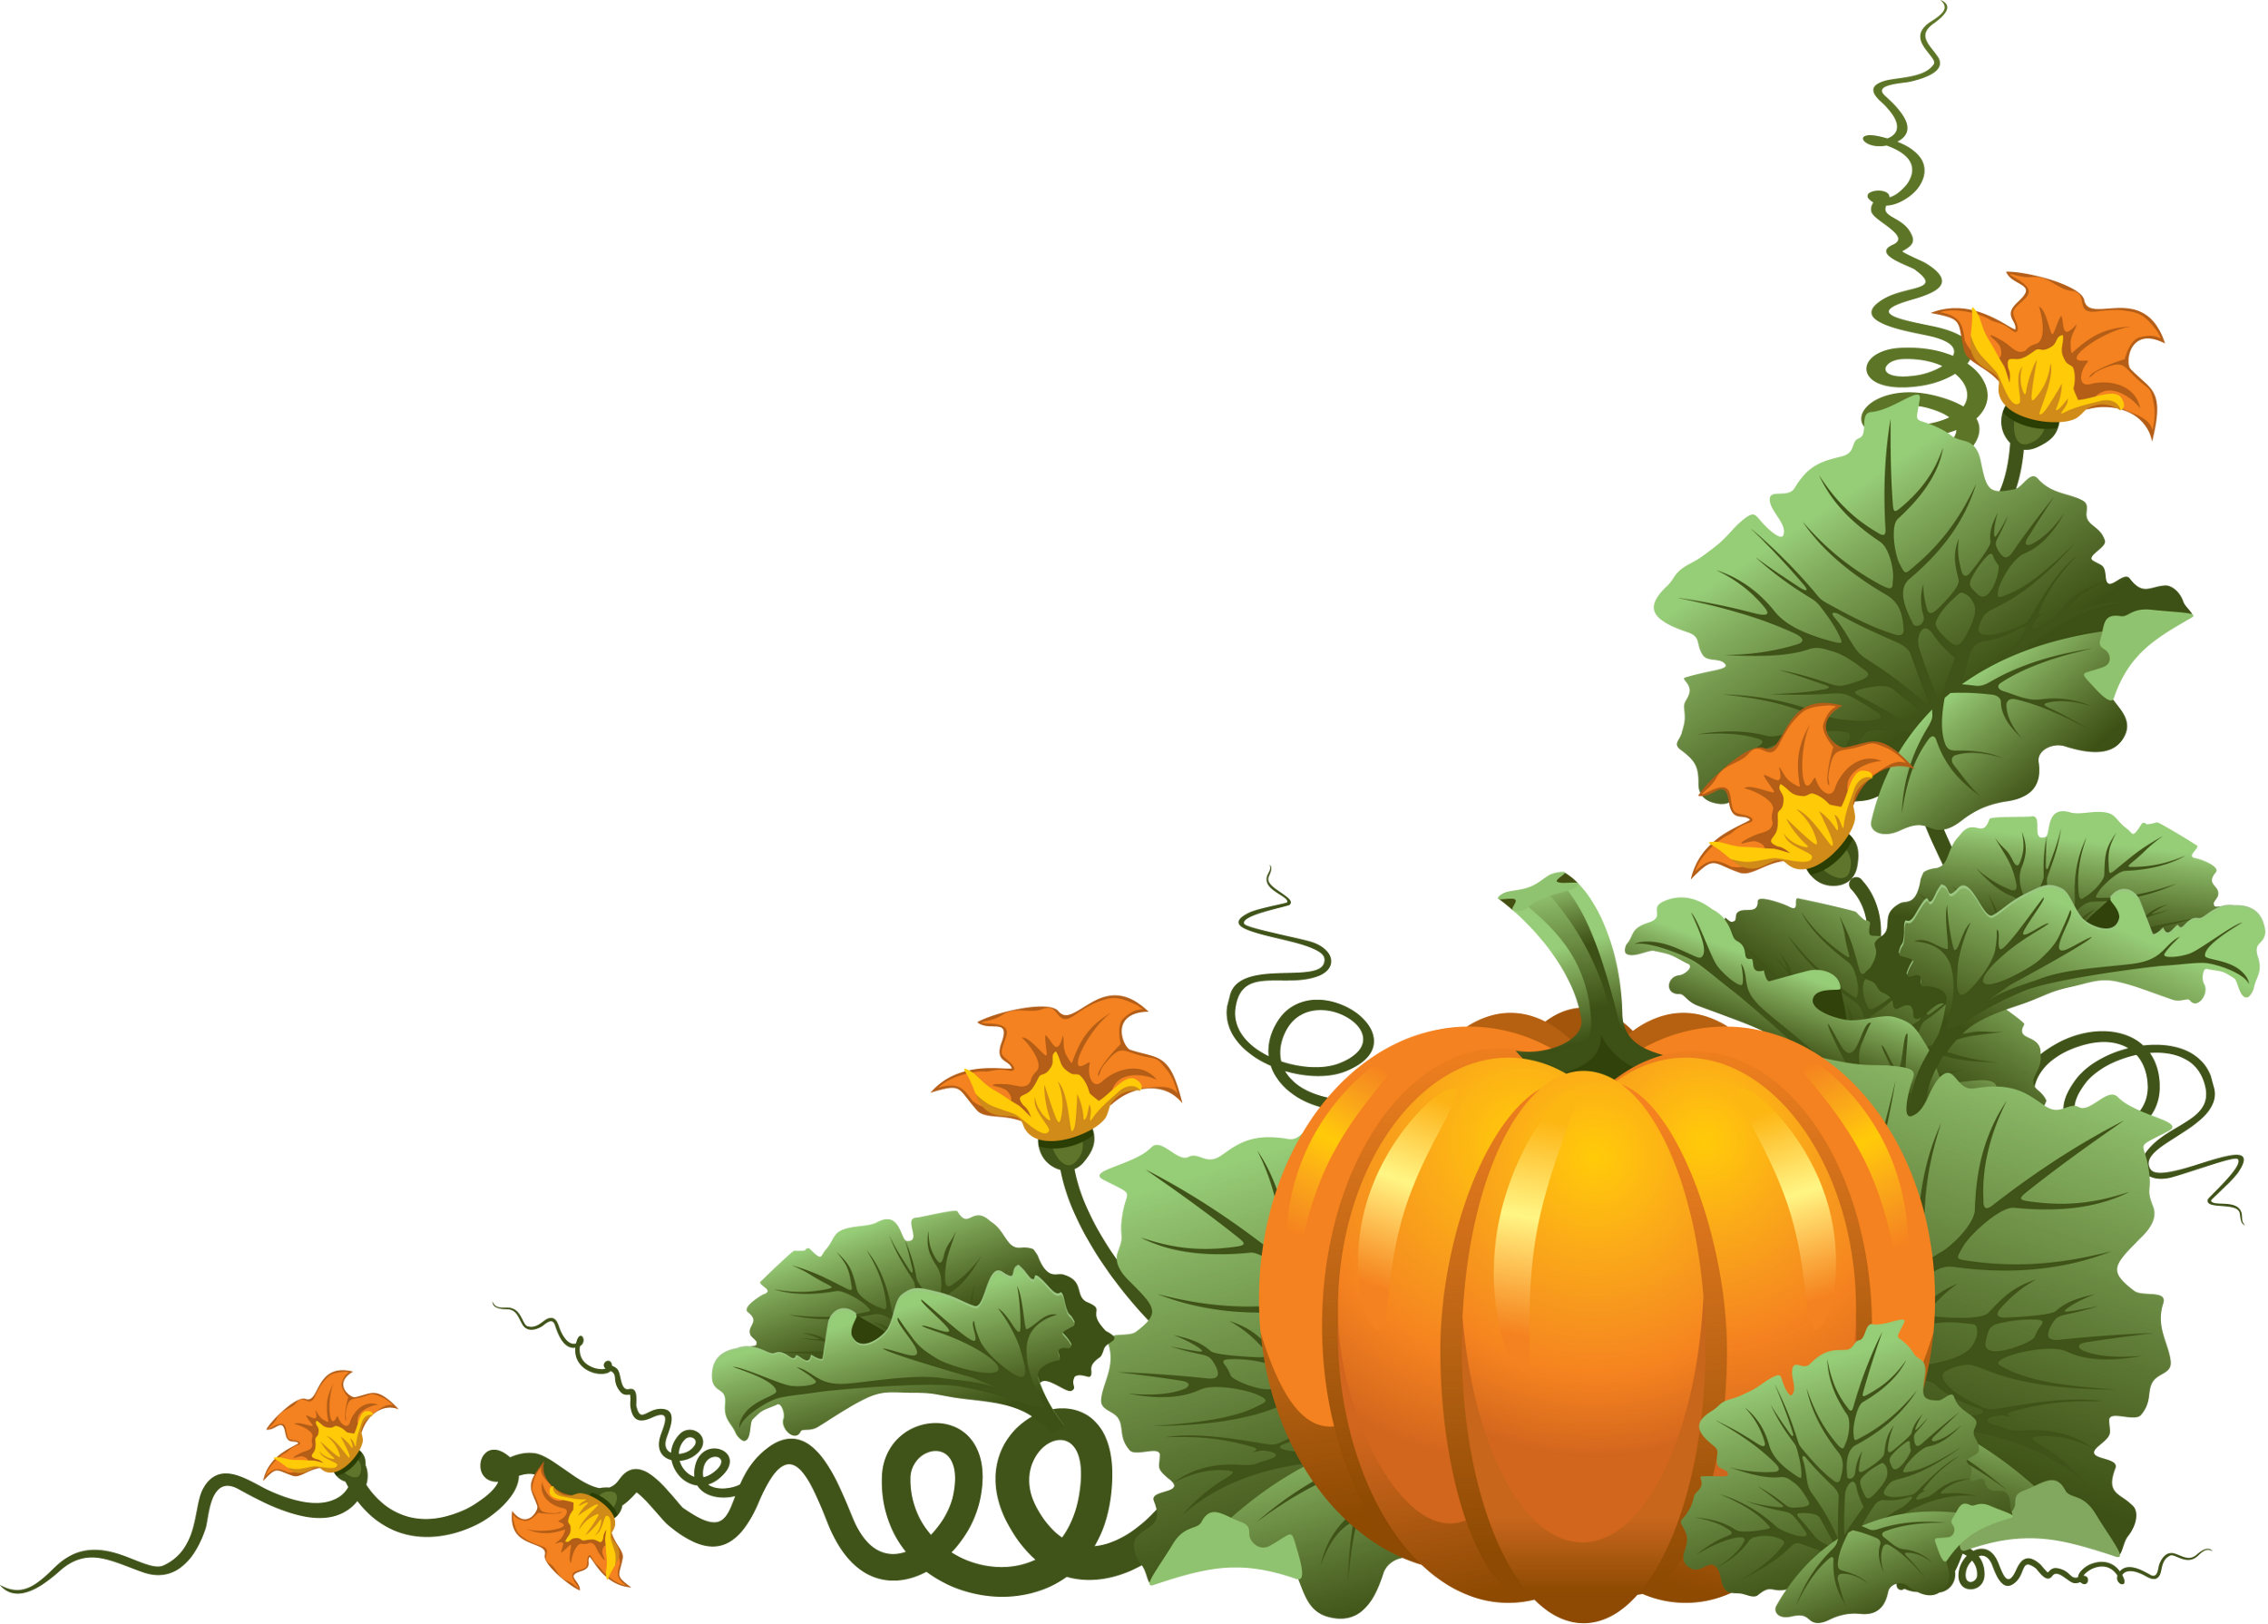 pumpkin-vine-border-clip-art-10-free-cliparts-download-images-on